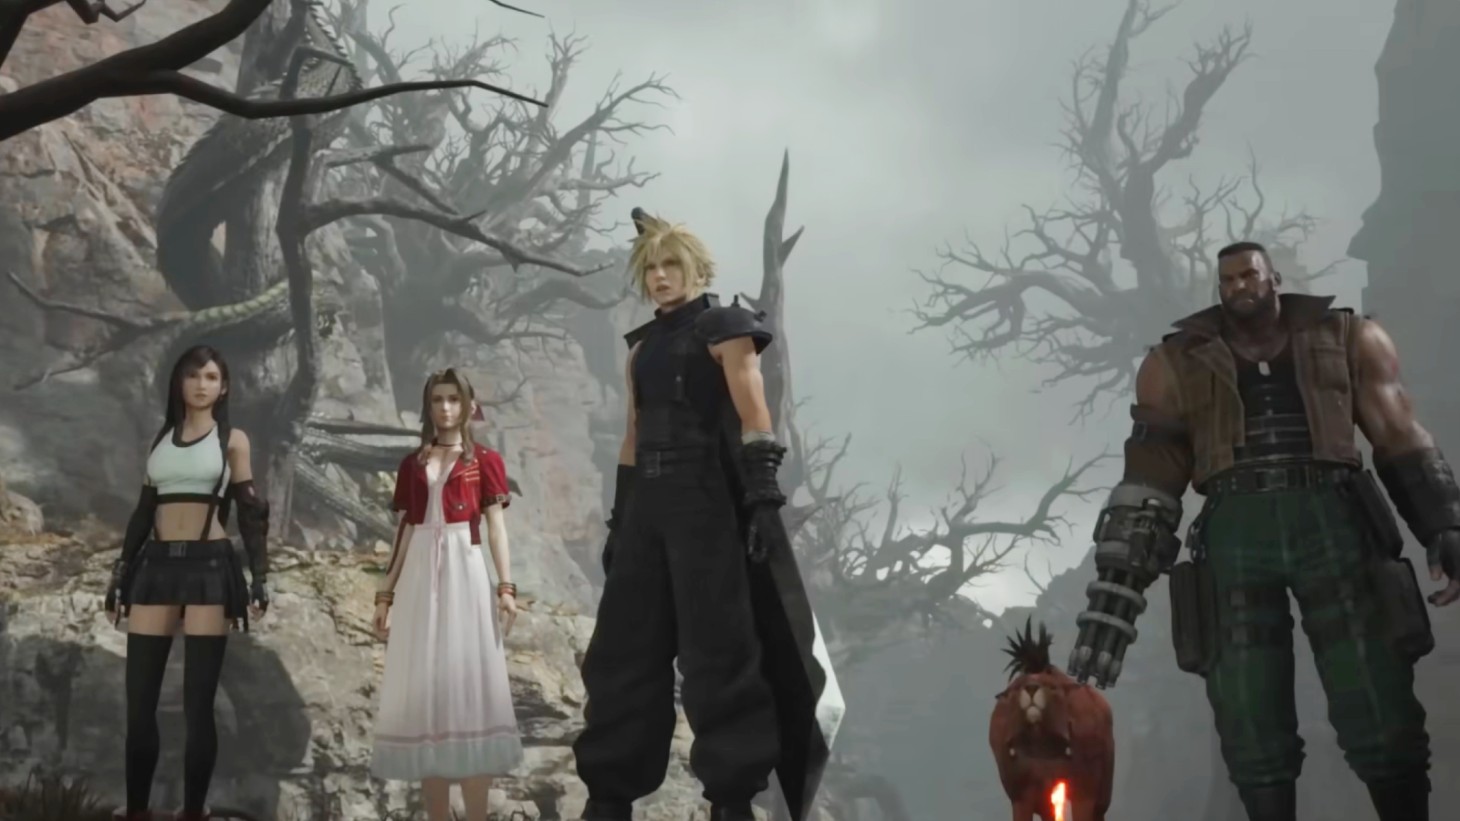 New Final Fantasy VII Rebirth Trailer Promises A Destined Fight